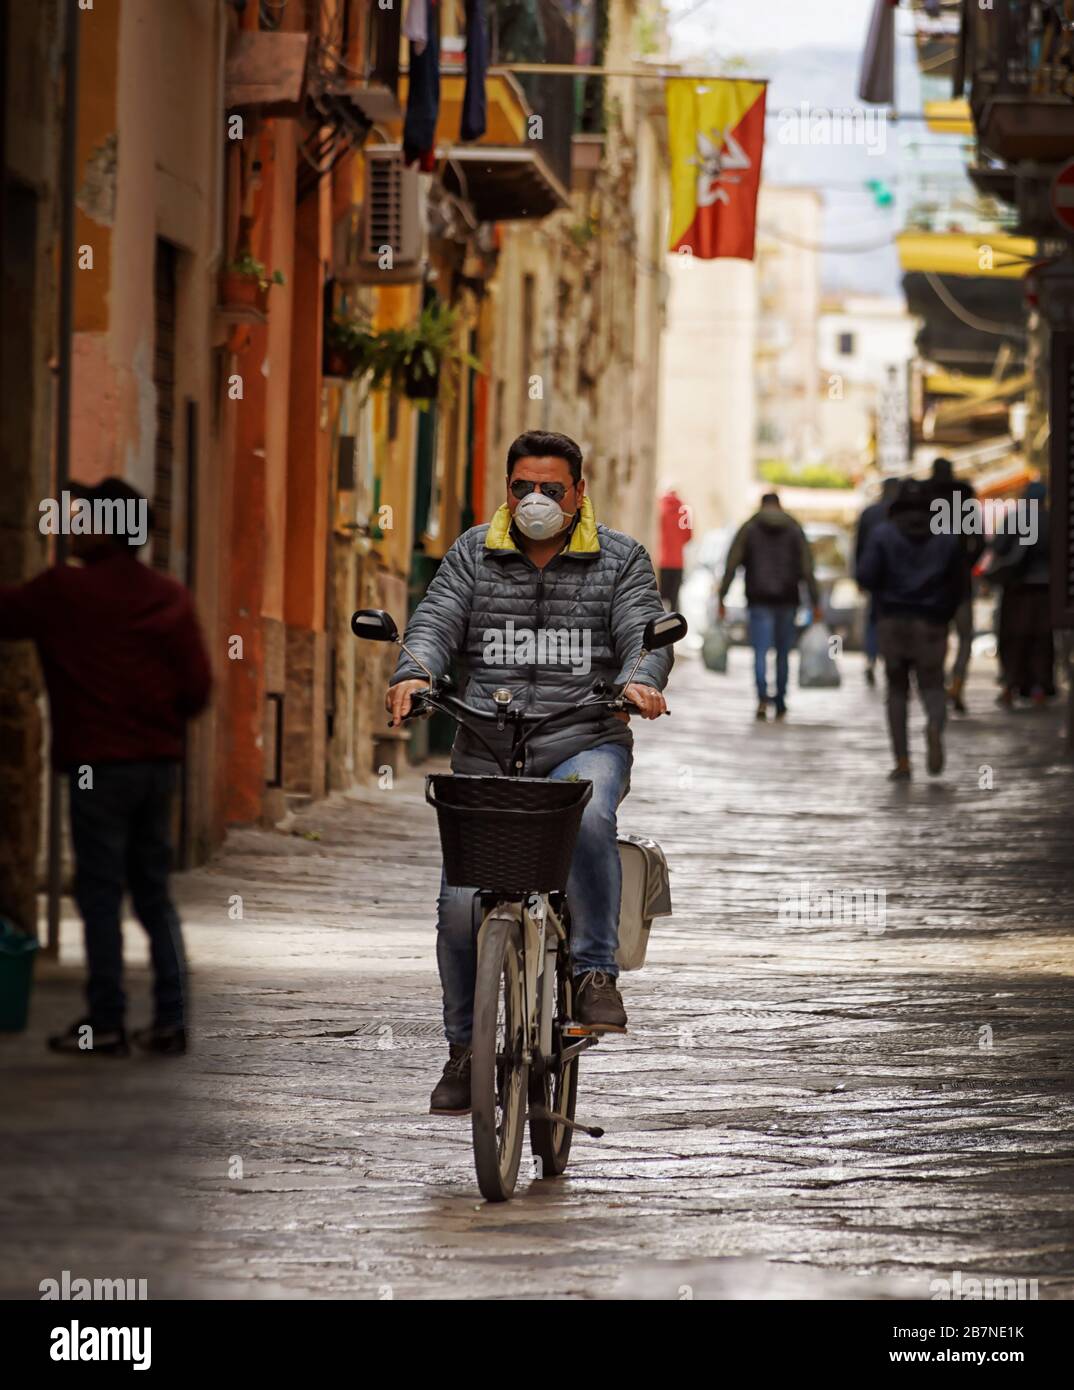 Corona virus pandemic in Palermo, Italy Stock Photo